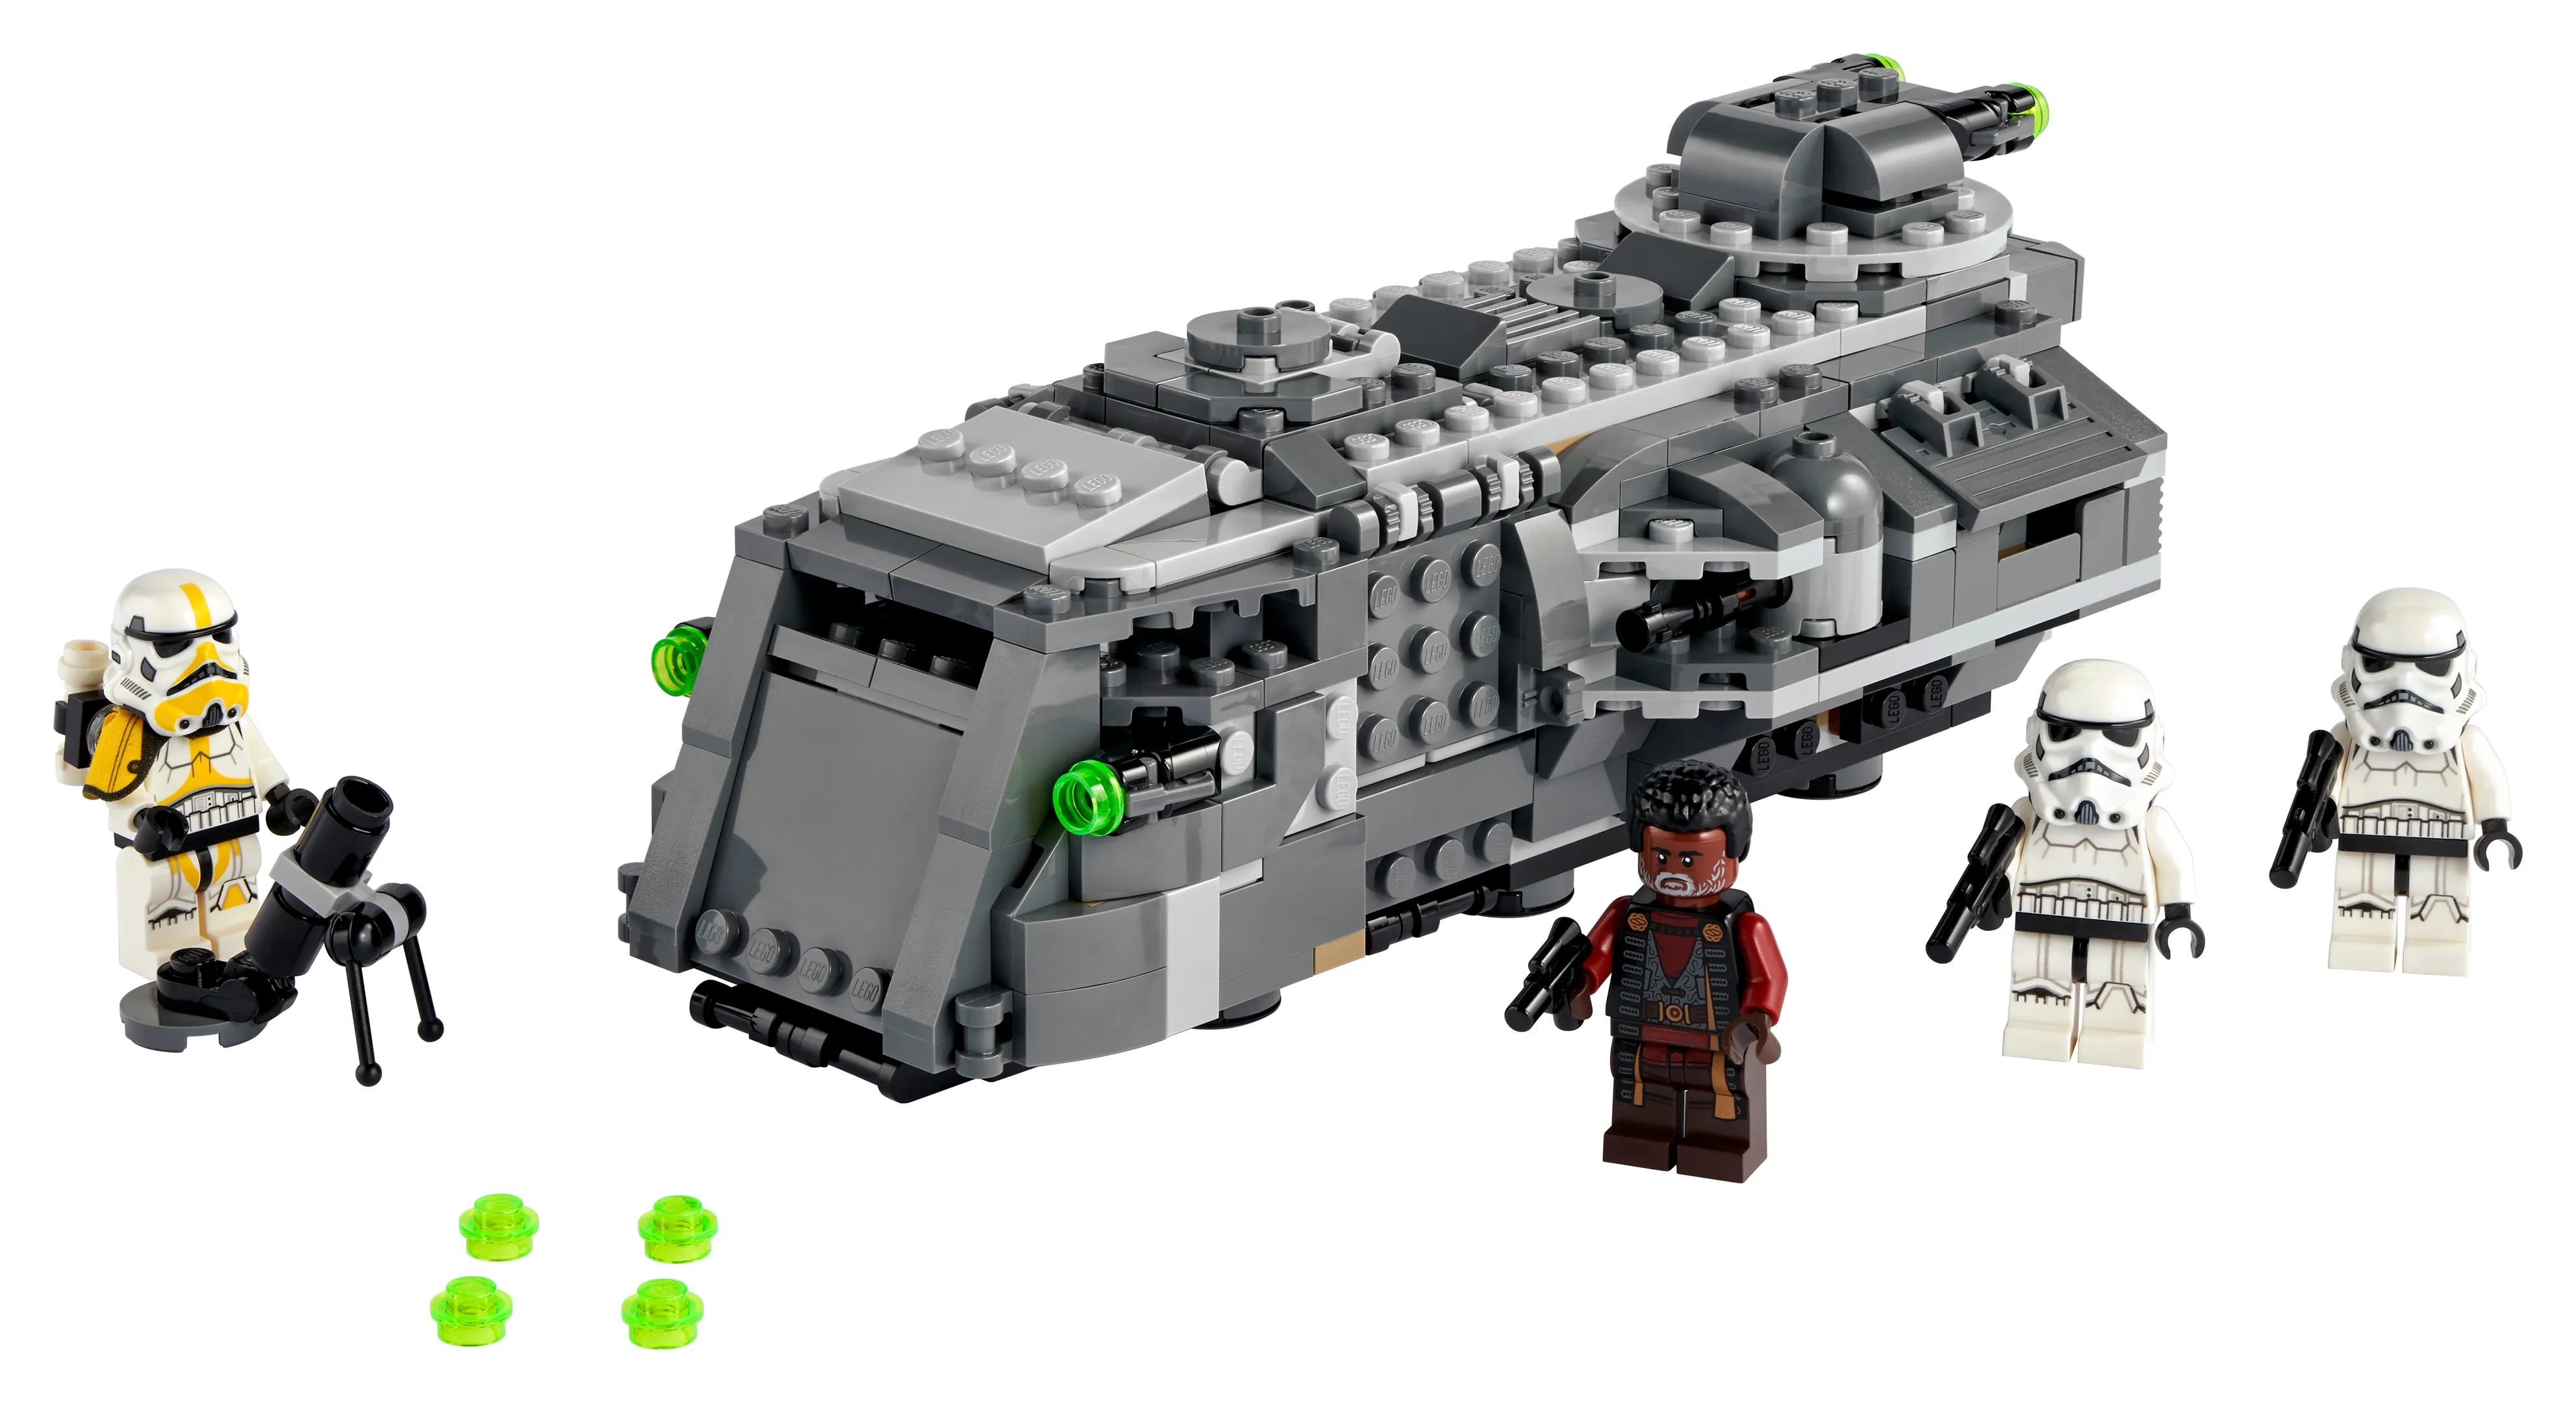 LEGO Star Wars Artillery Stormtrooper Minifigure 75311 sw1157 Yellow